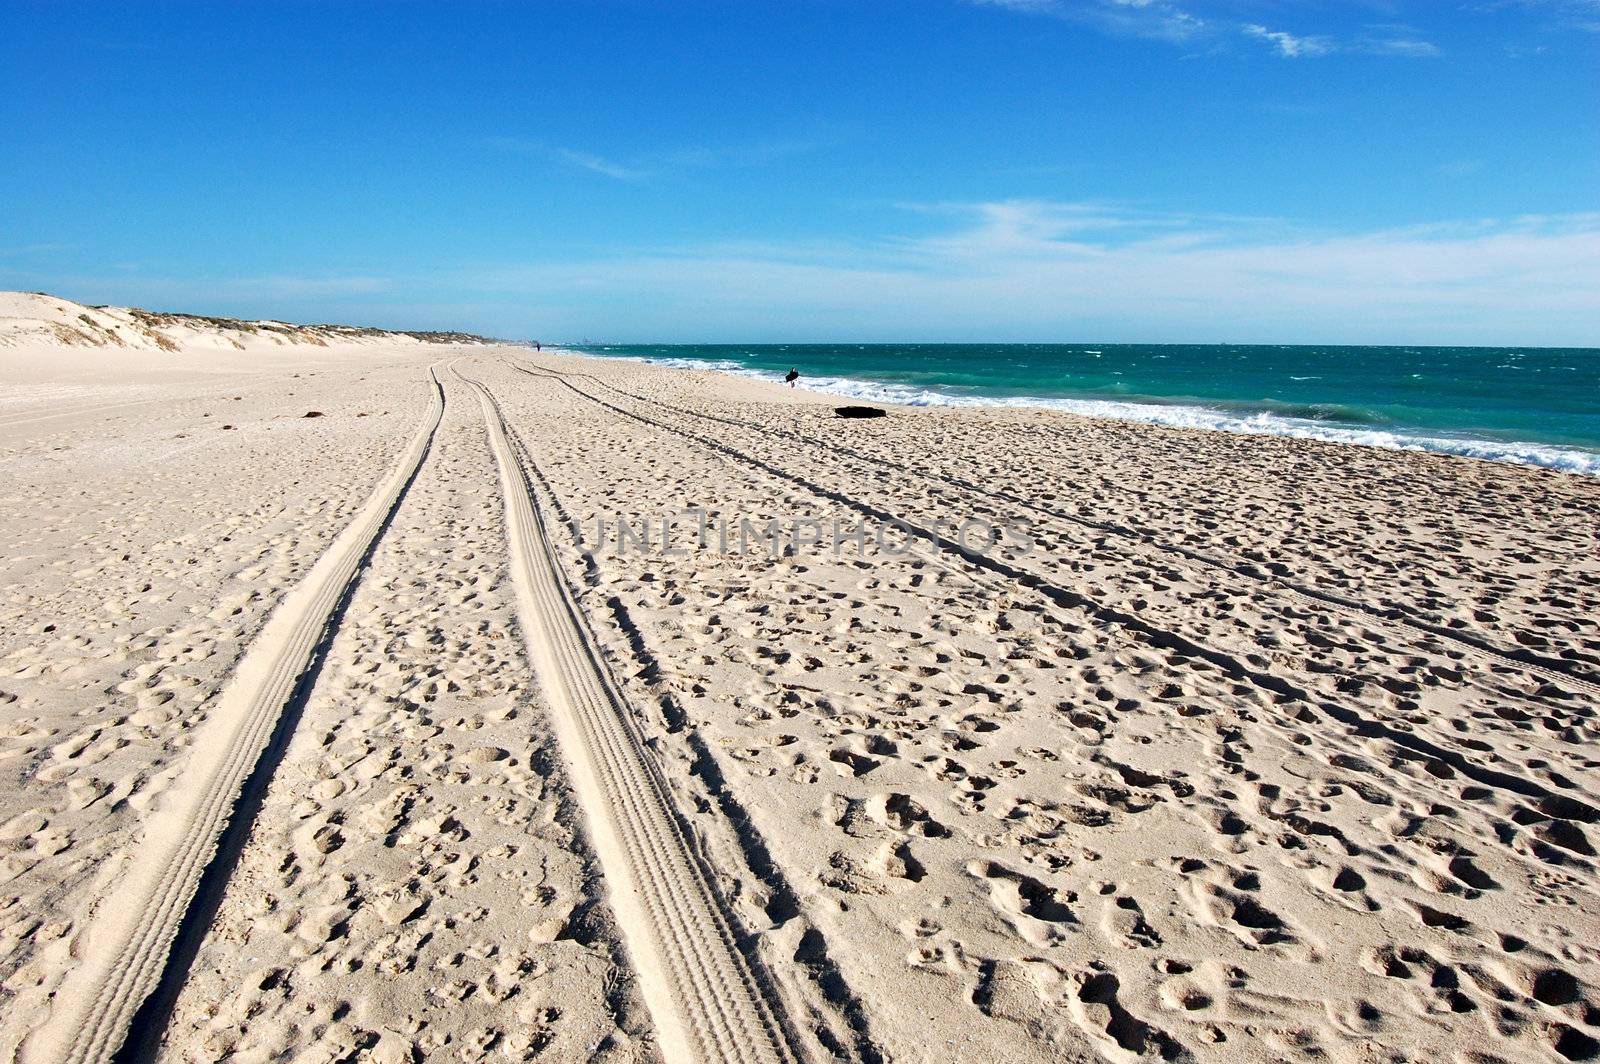 Car track on white sand beach, Australia